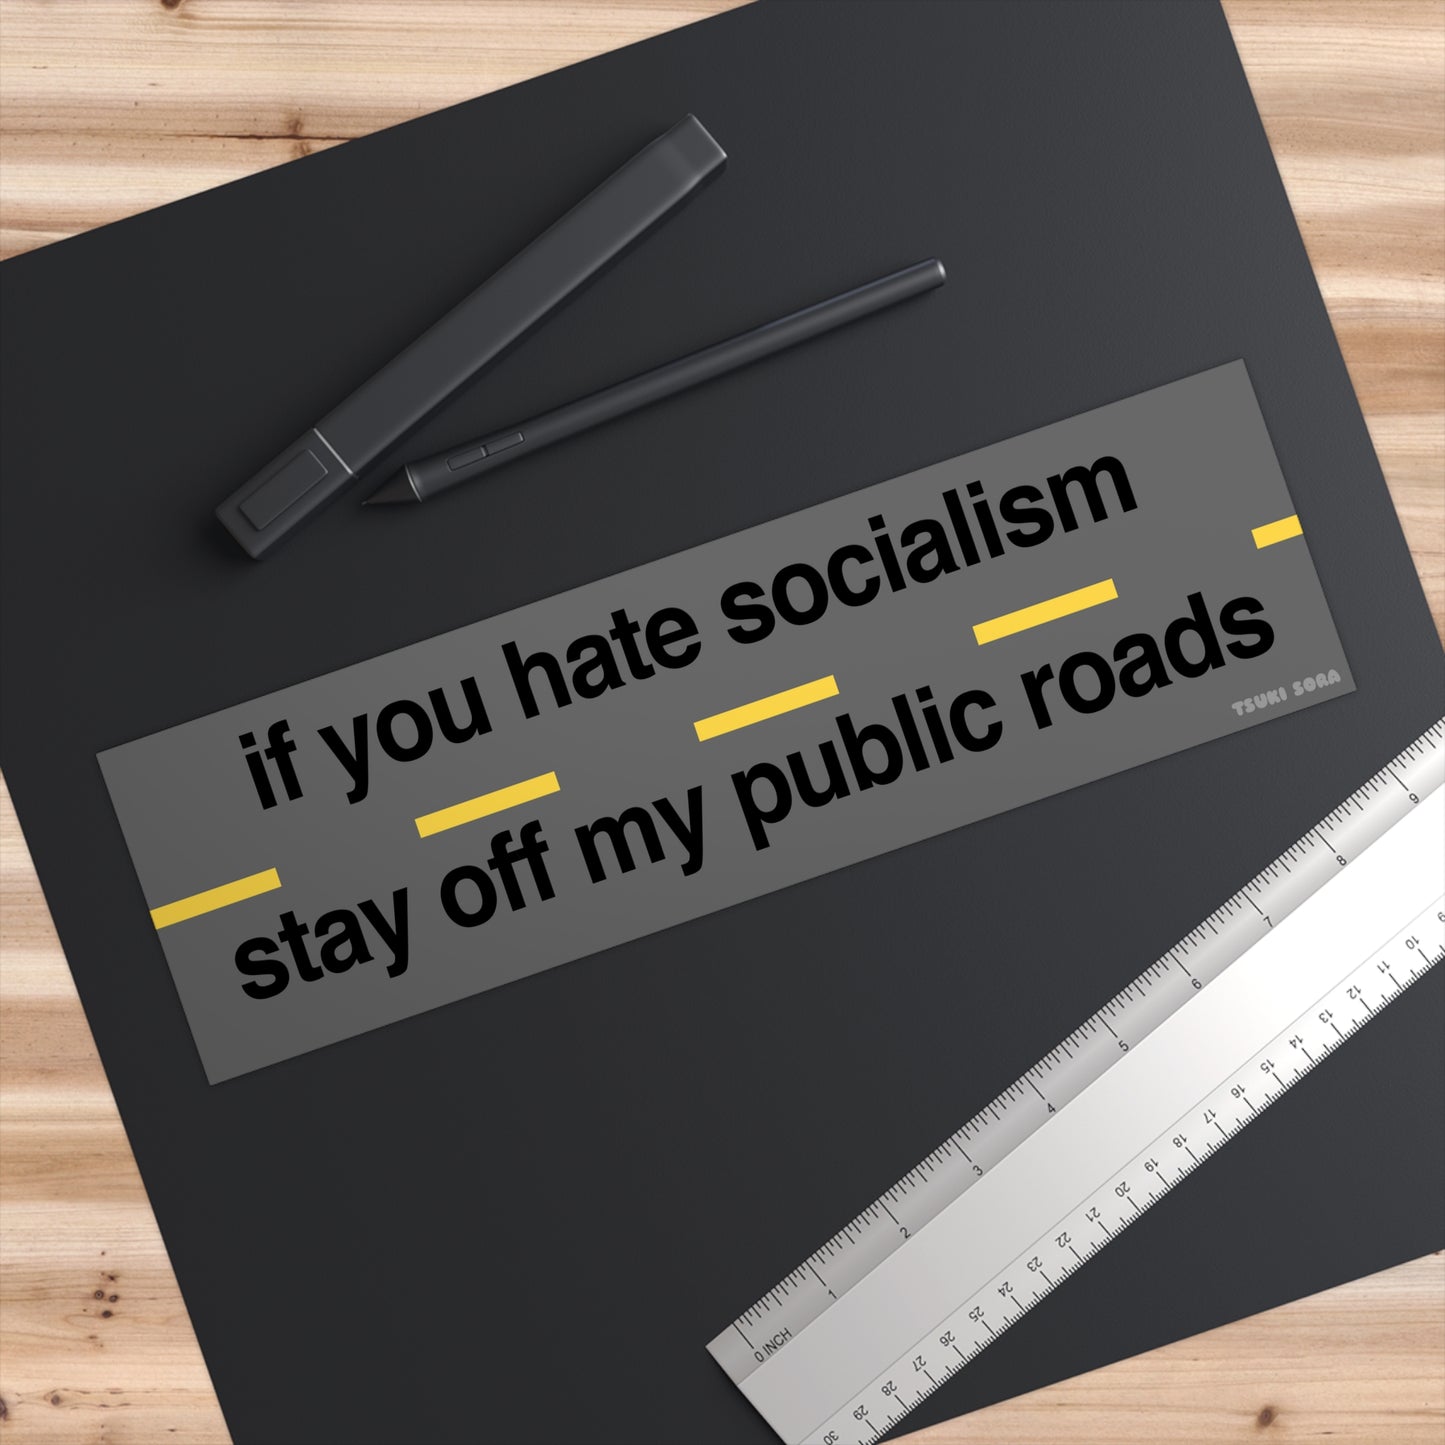 If You Hate Socialism Stay Off My Public Roads Bumper Sticker